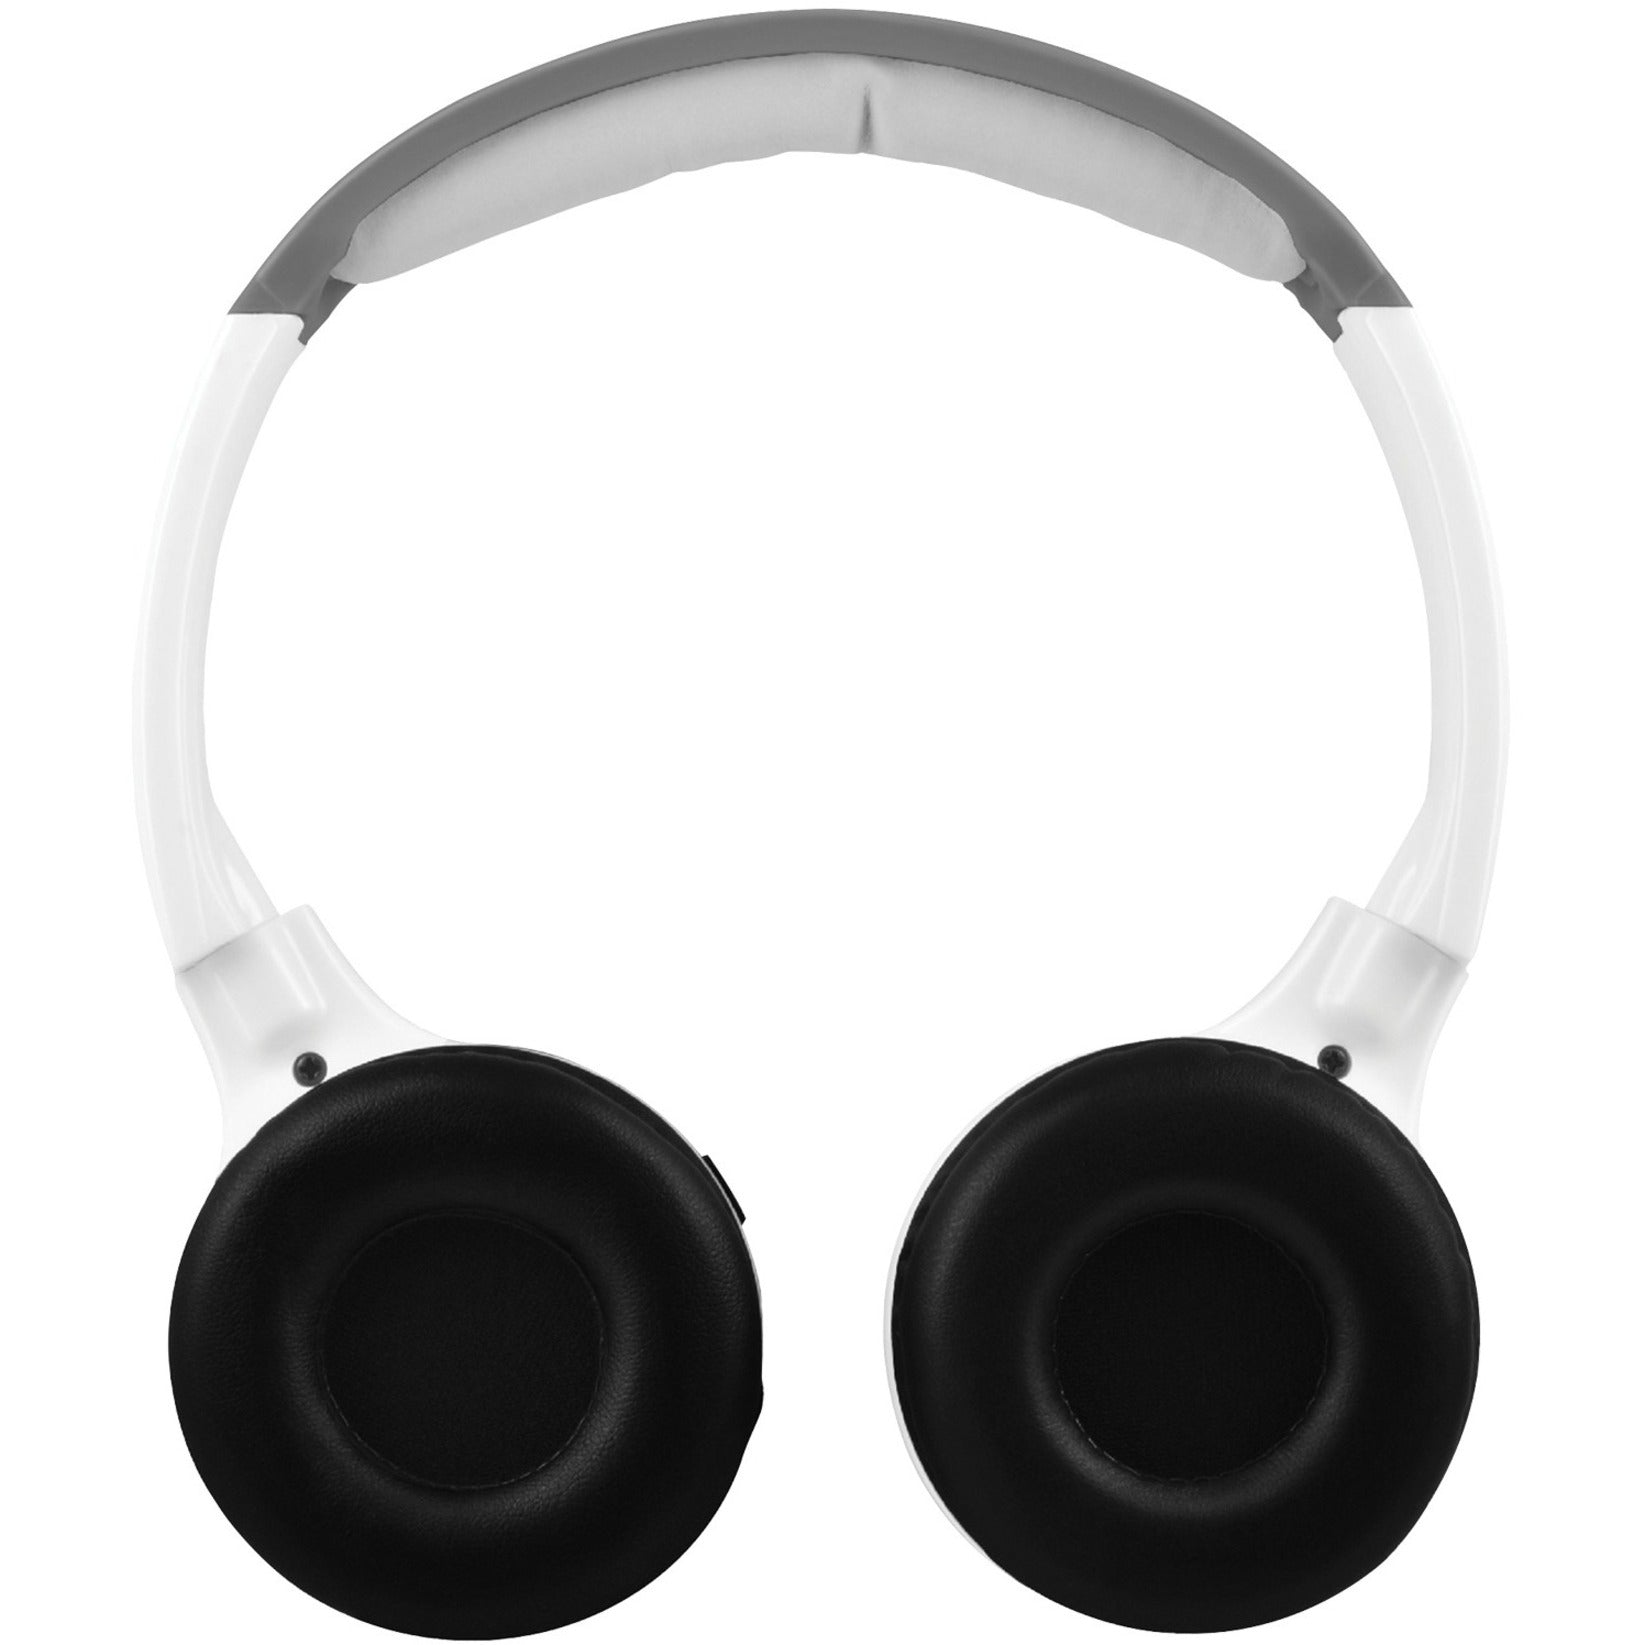 XOVision IR630BL Universal IR Wireless Foldable Headphones, Rechargeable Battery, Adjustable Headband, Black